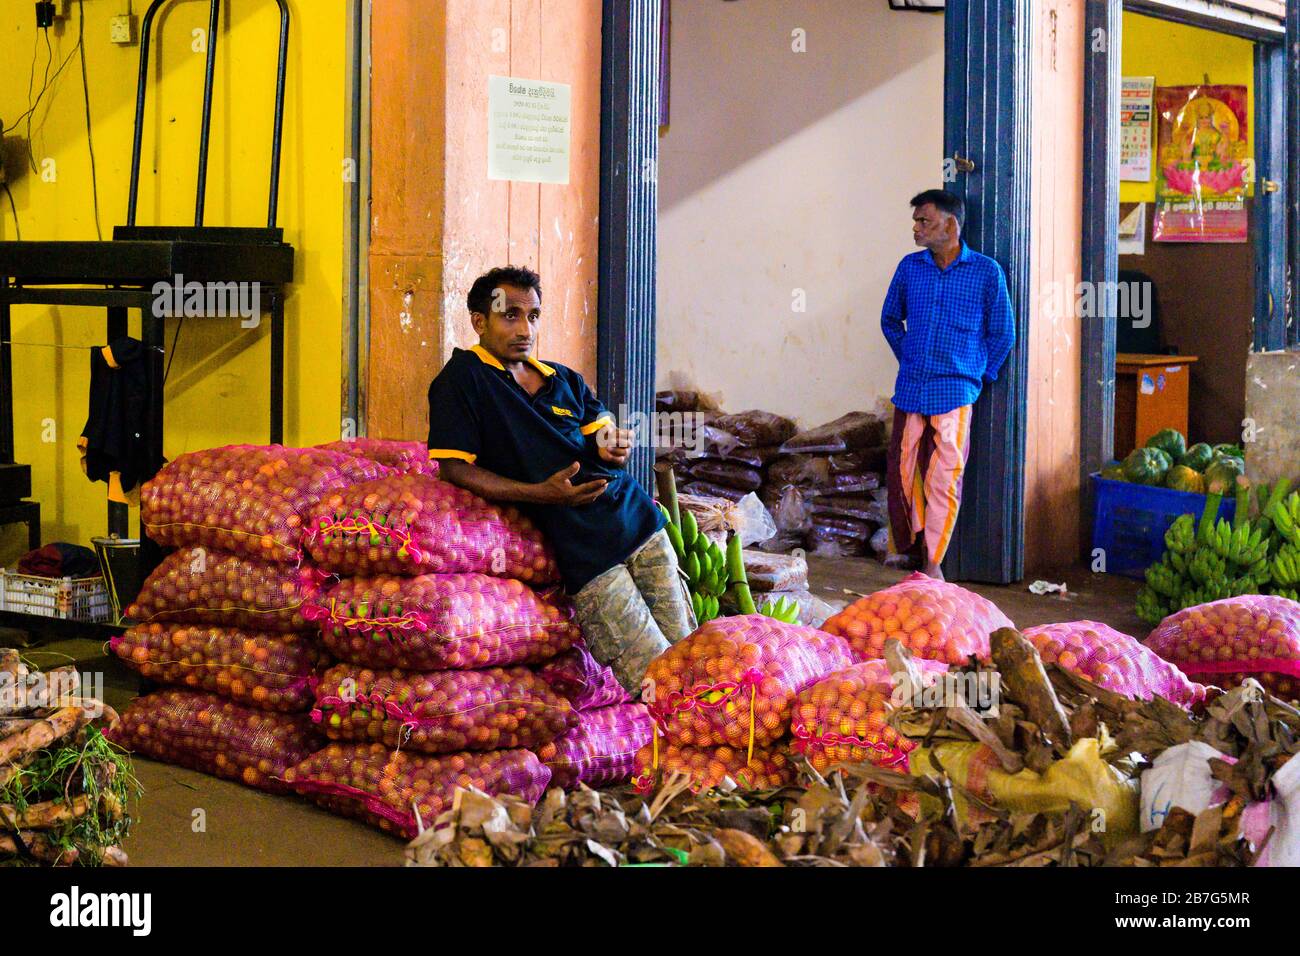 South Asia Sri Lanka Ceylon Dambulla Economic Centre Center wholesale vegetable & fruit market vendor leaning piles red plastic sacks bananas apples Stock Photo